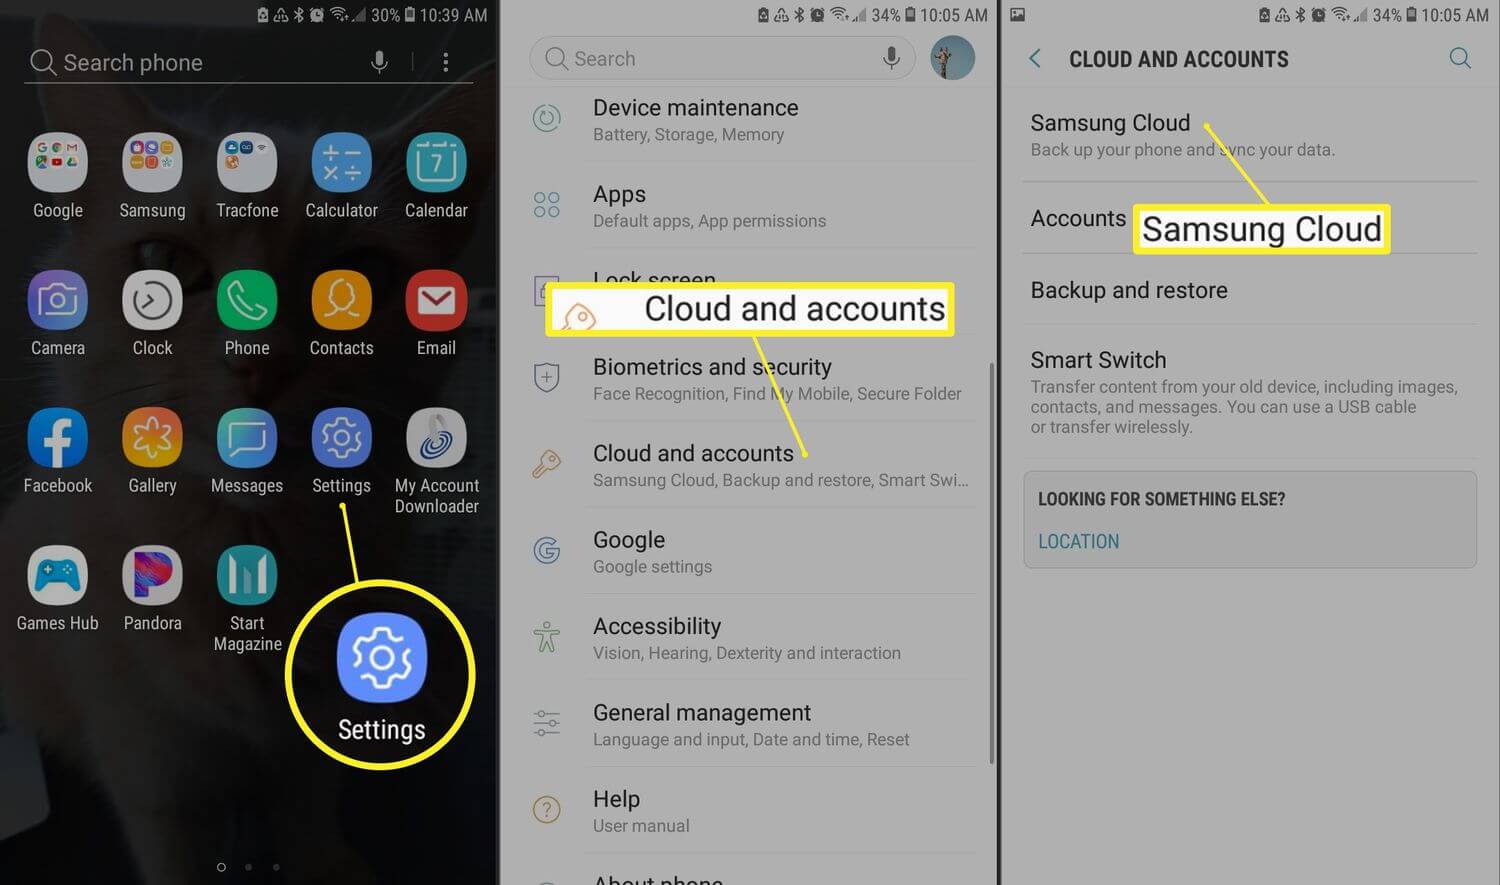 samsung cloud and accounts